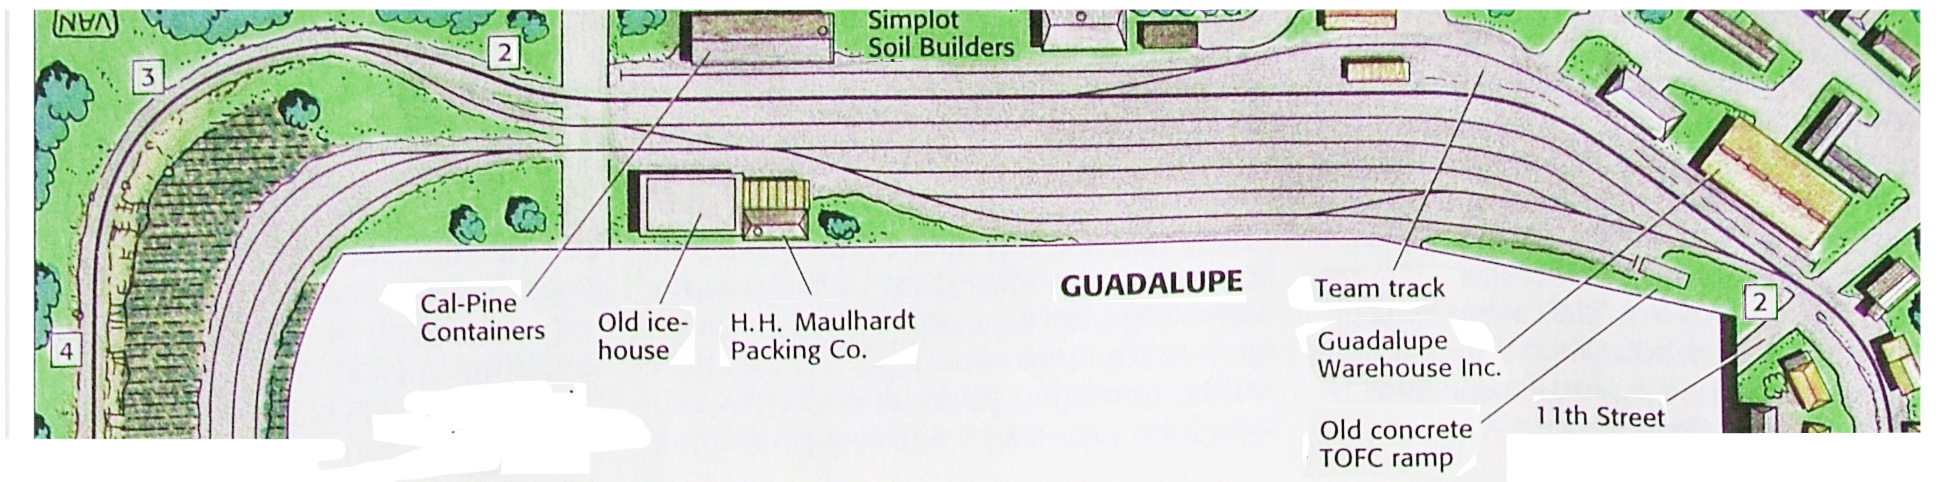 Model Railroad Shelf Layout Plans